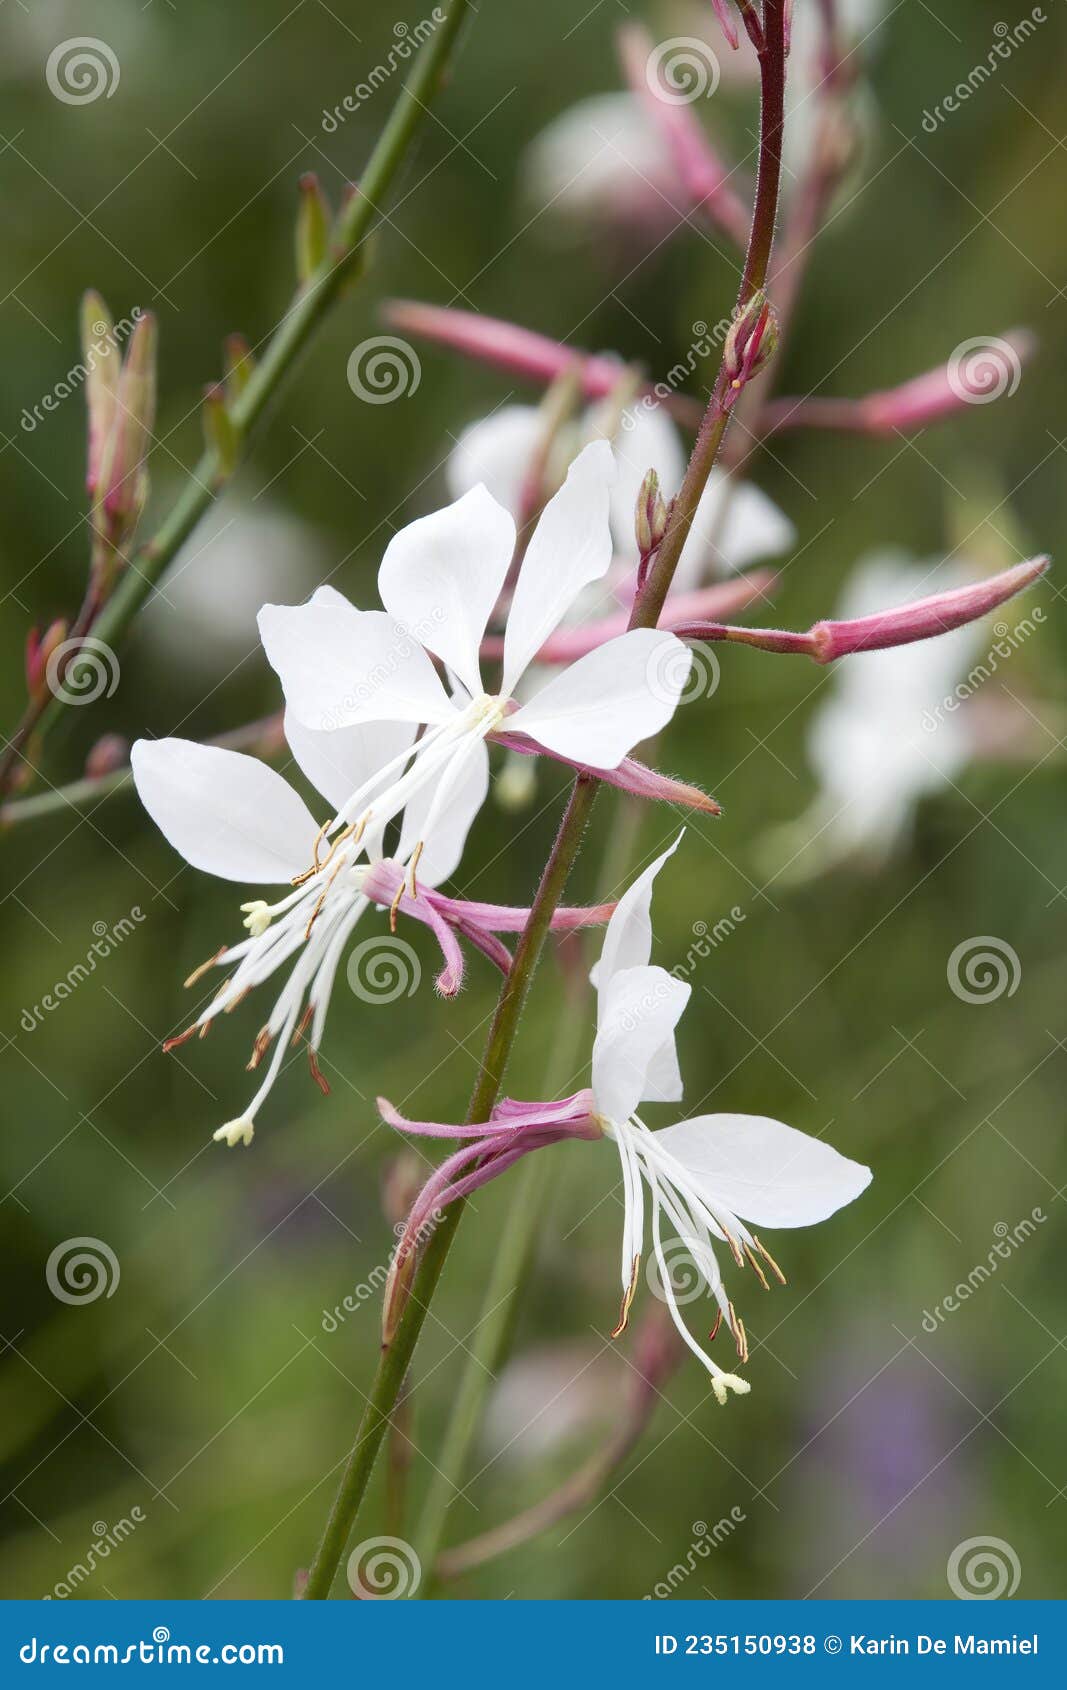 white flowers of gaura lindheimeri plant